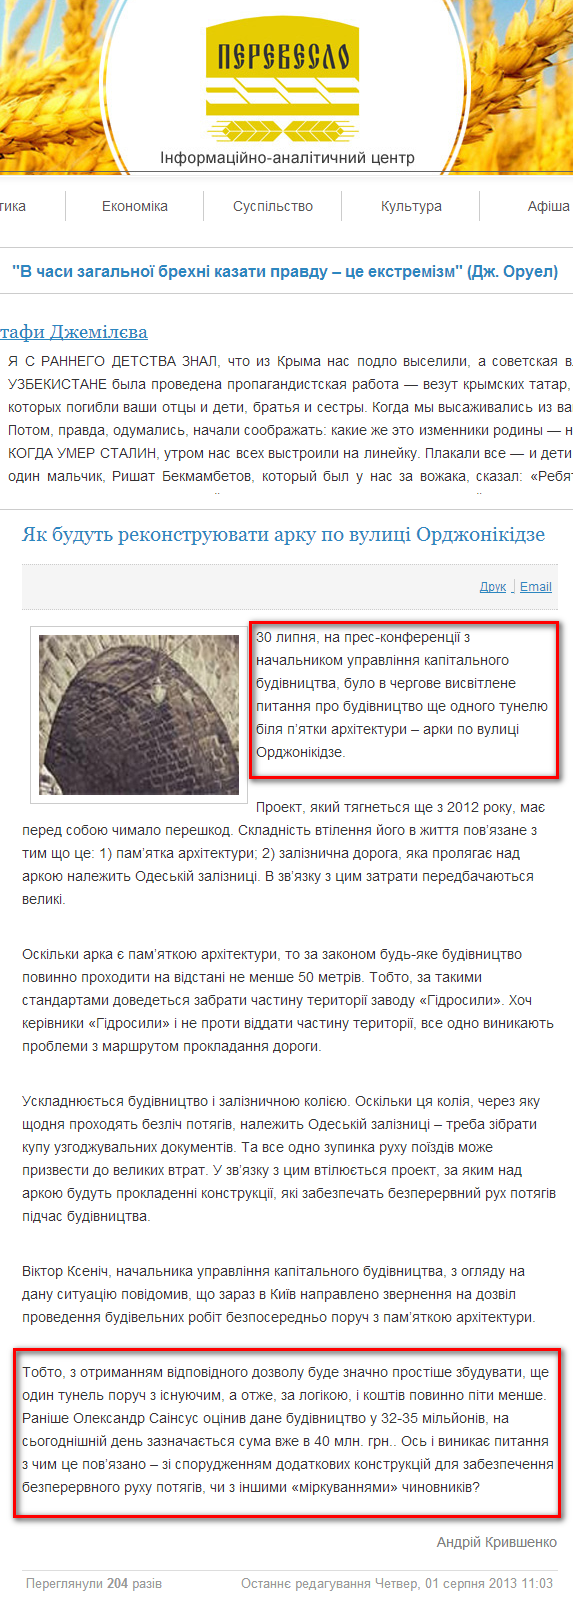 http://pereveslo.org.ua/index.php/zagin-samooborony/item/3068-jak-budut-rekonstrujuvati-arku-po-vulic%D1%96-ordzhon%D1%96k%D1%96dze.html